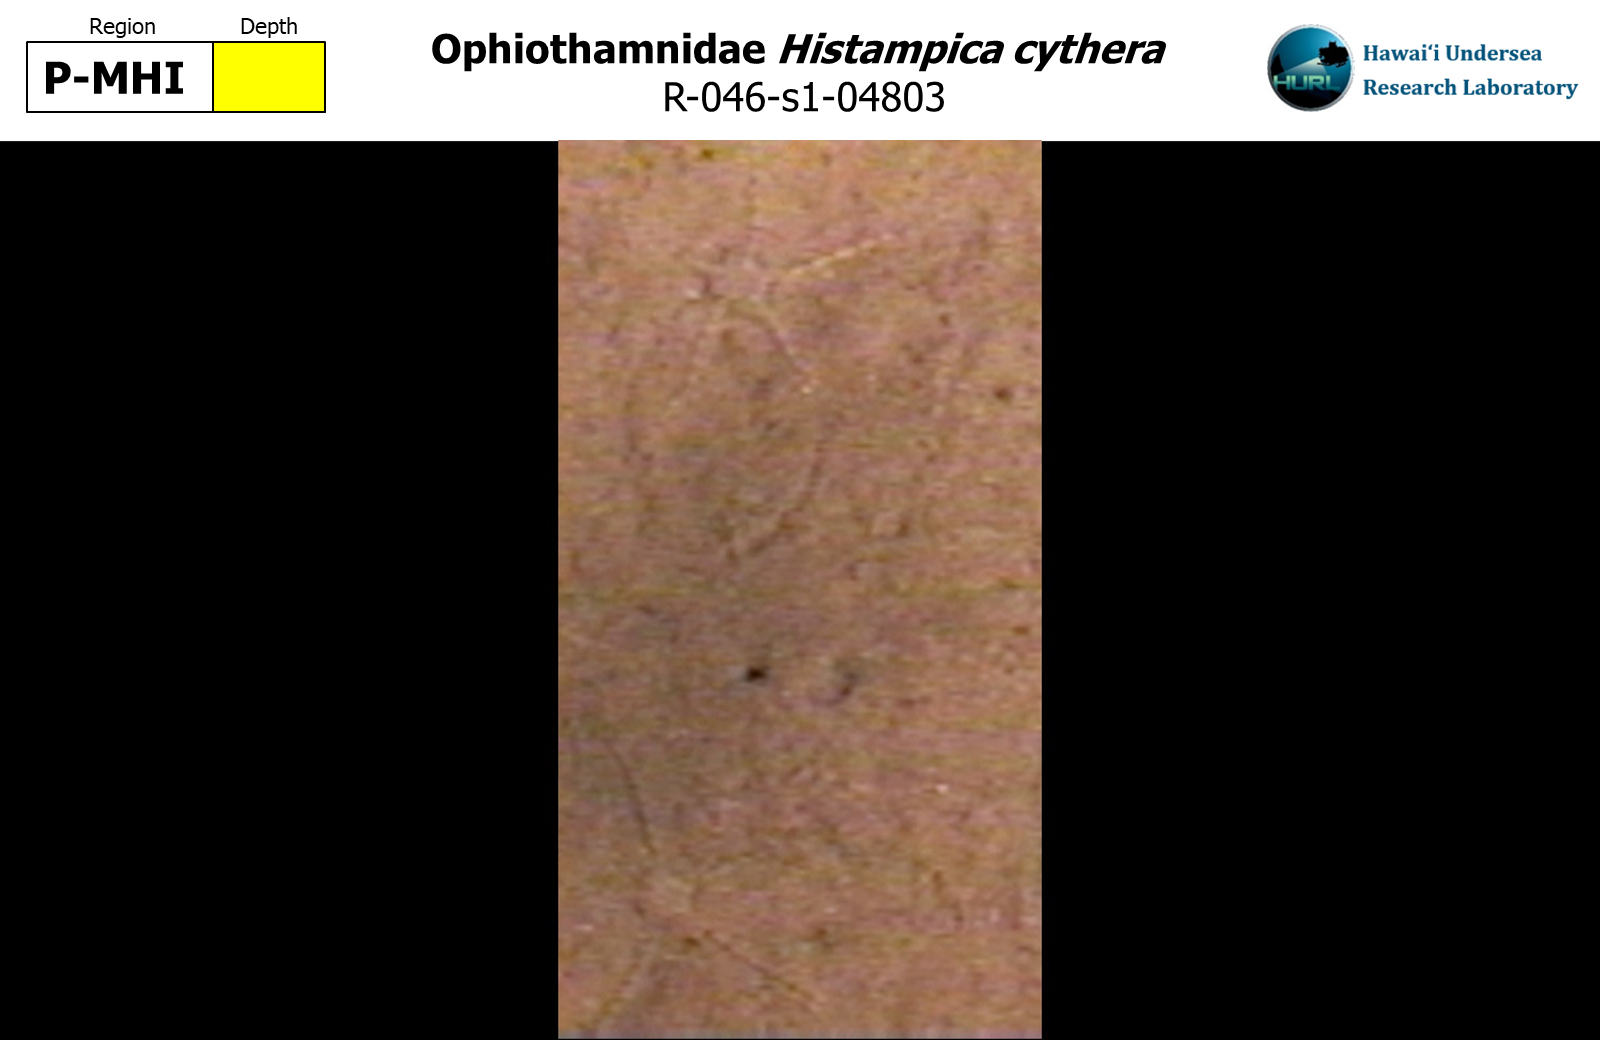 Histampica cythera